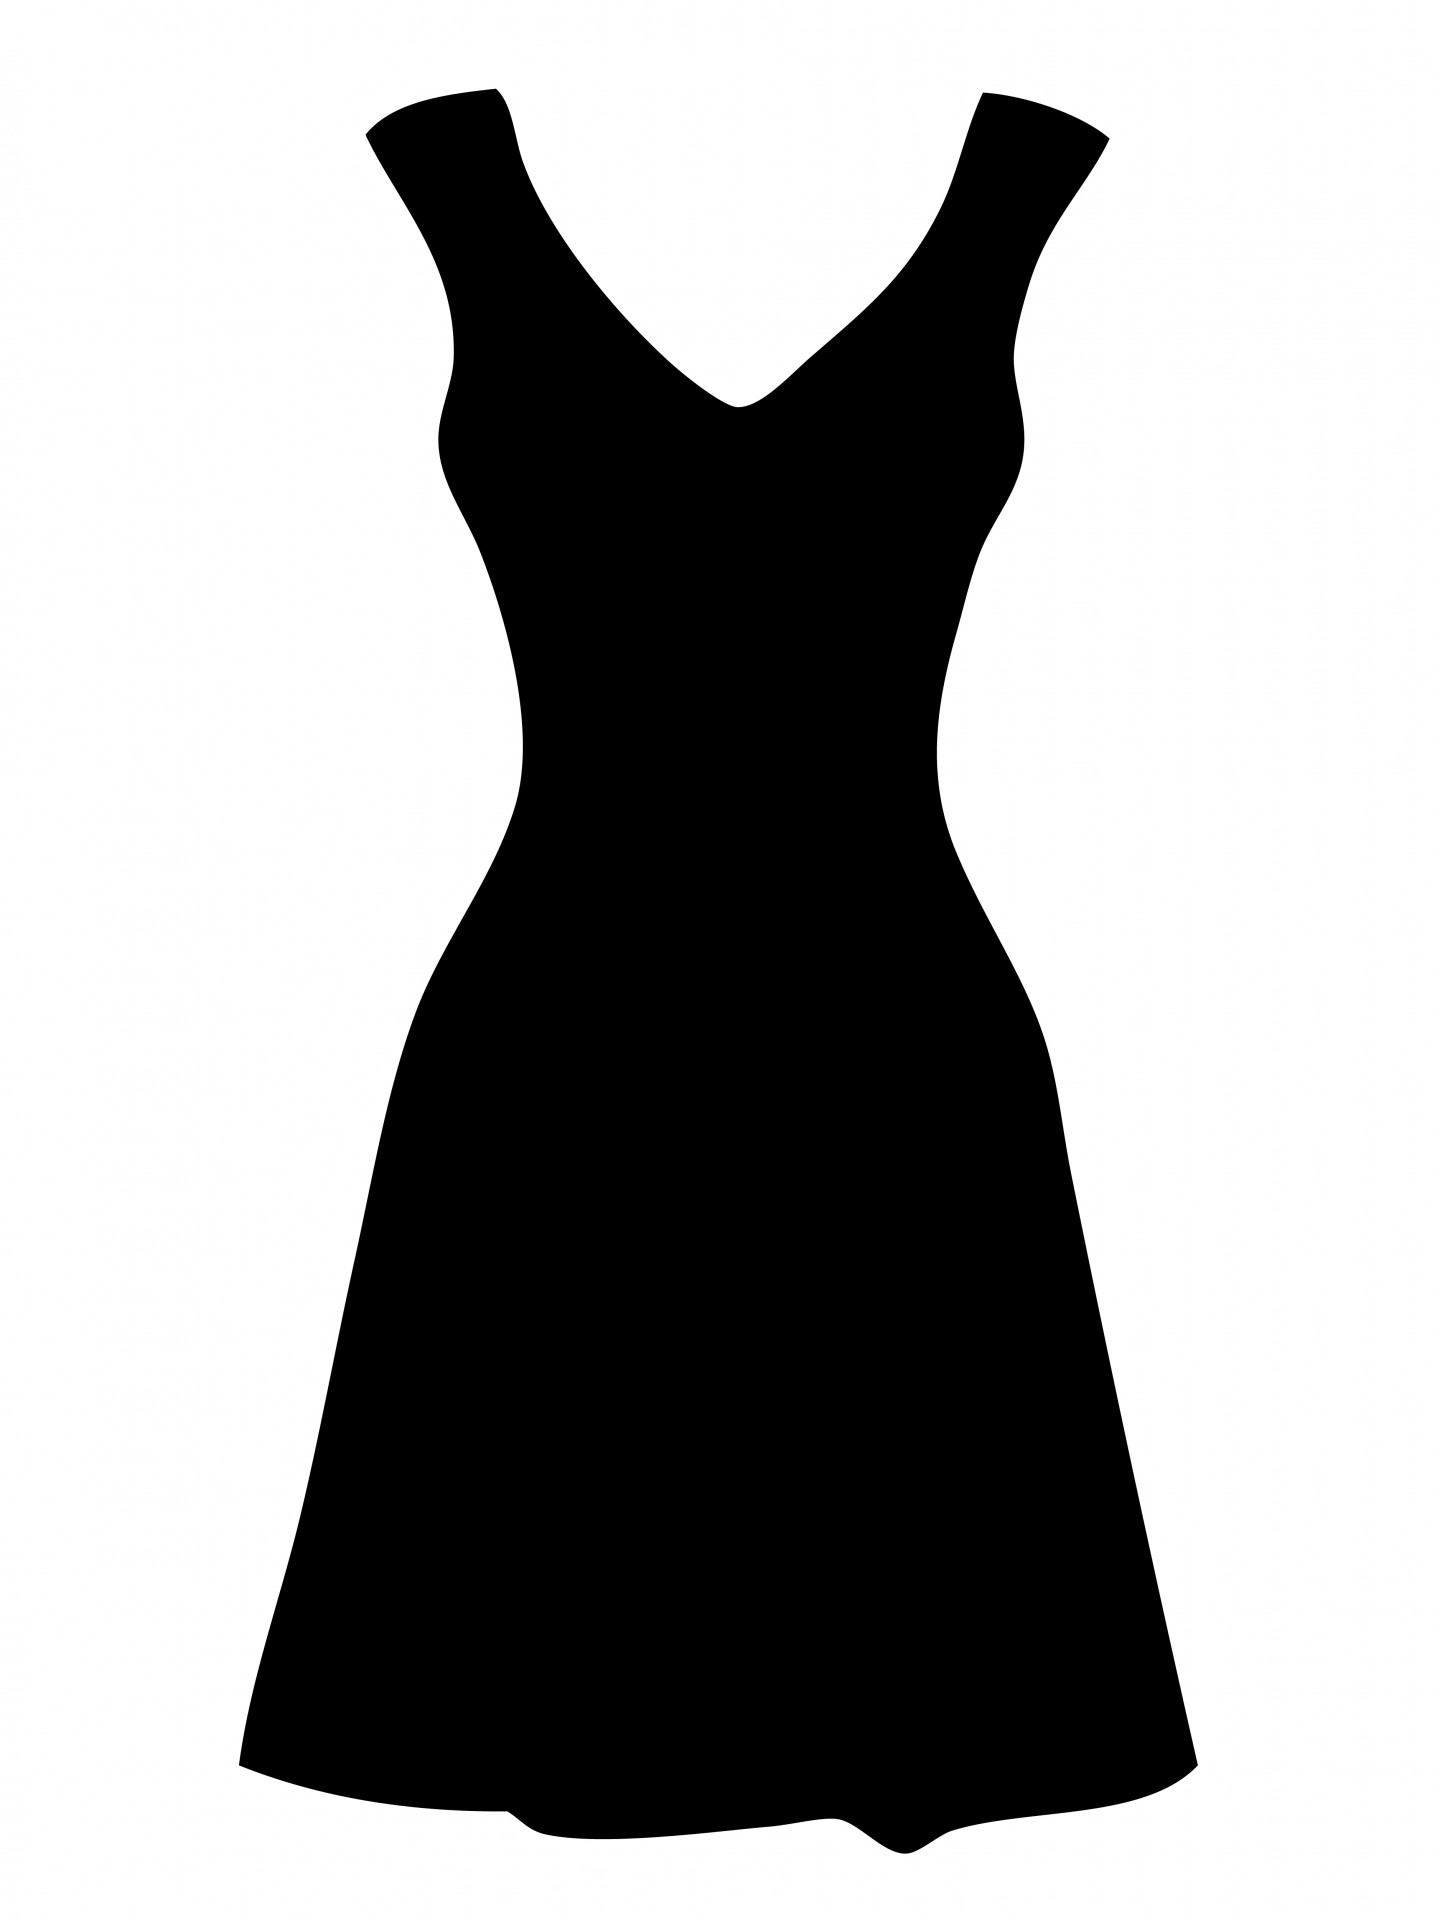 Dress Clipart | Free Download Clip Art | Free Clip Art | on ...